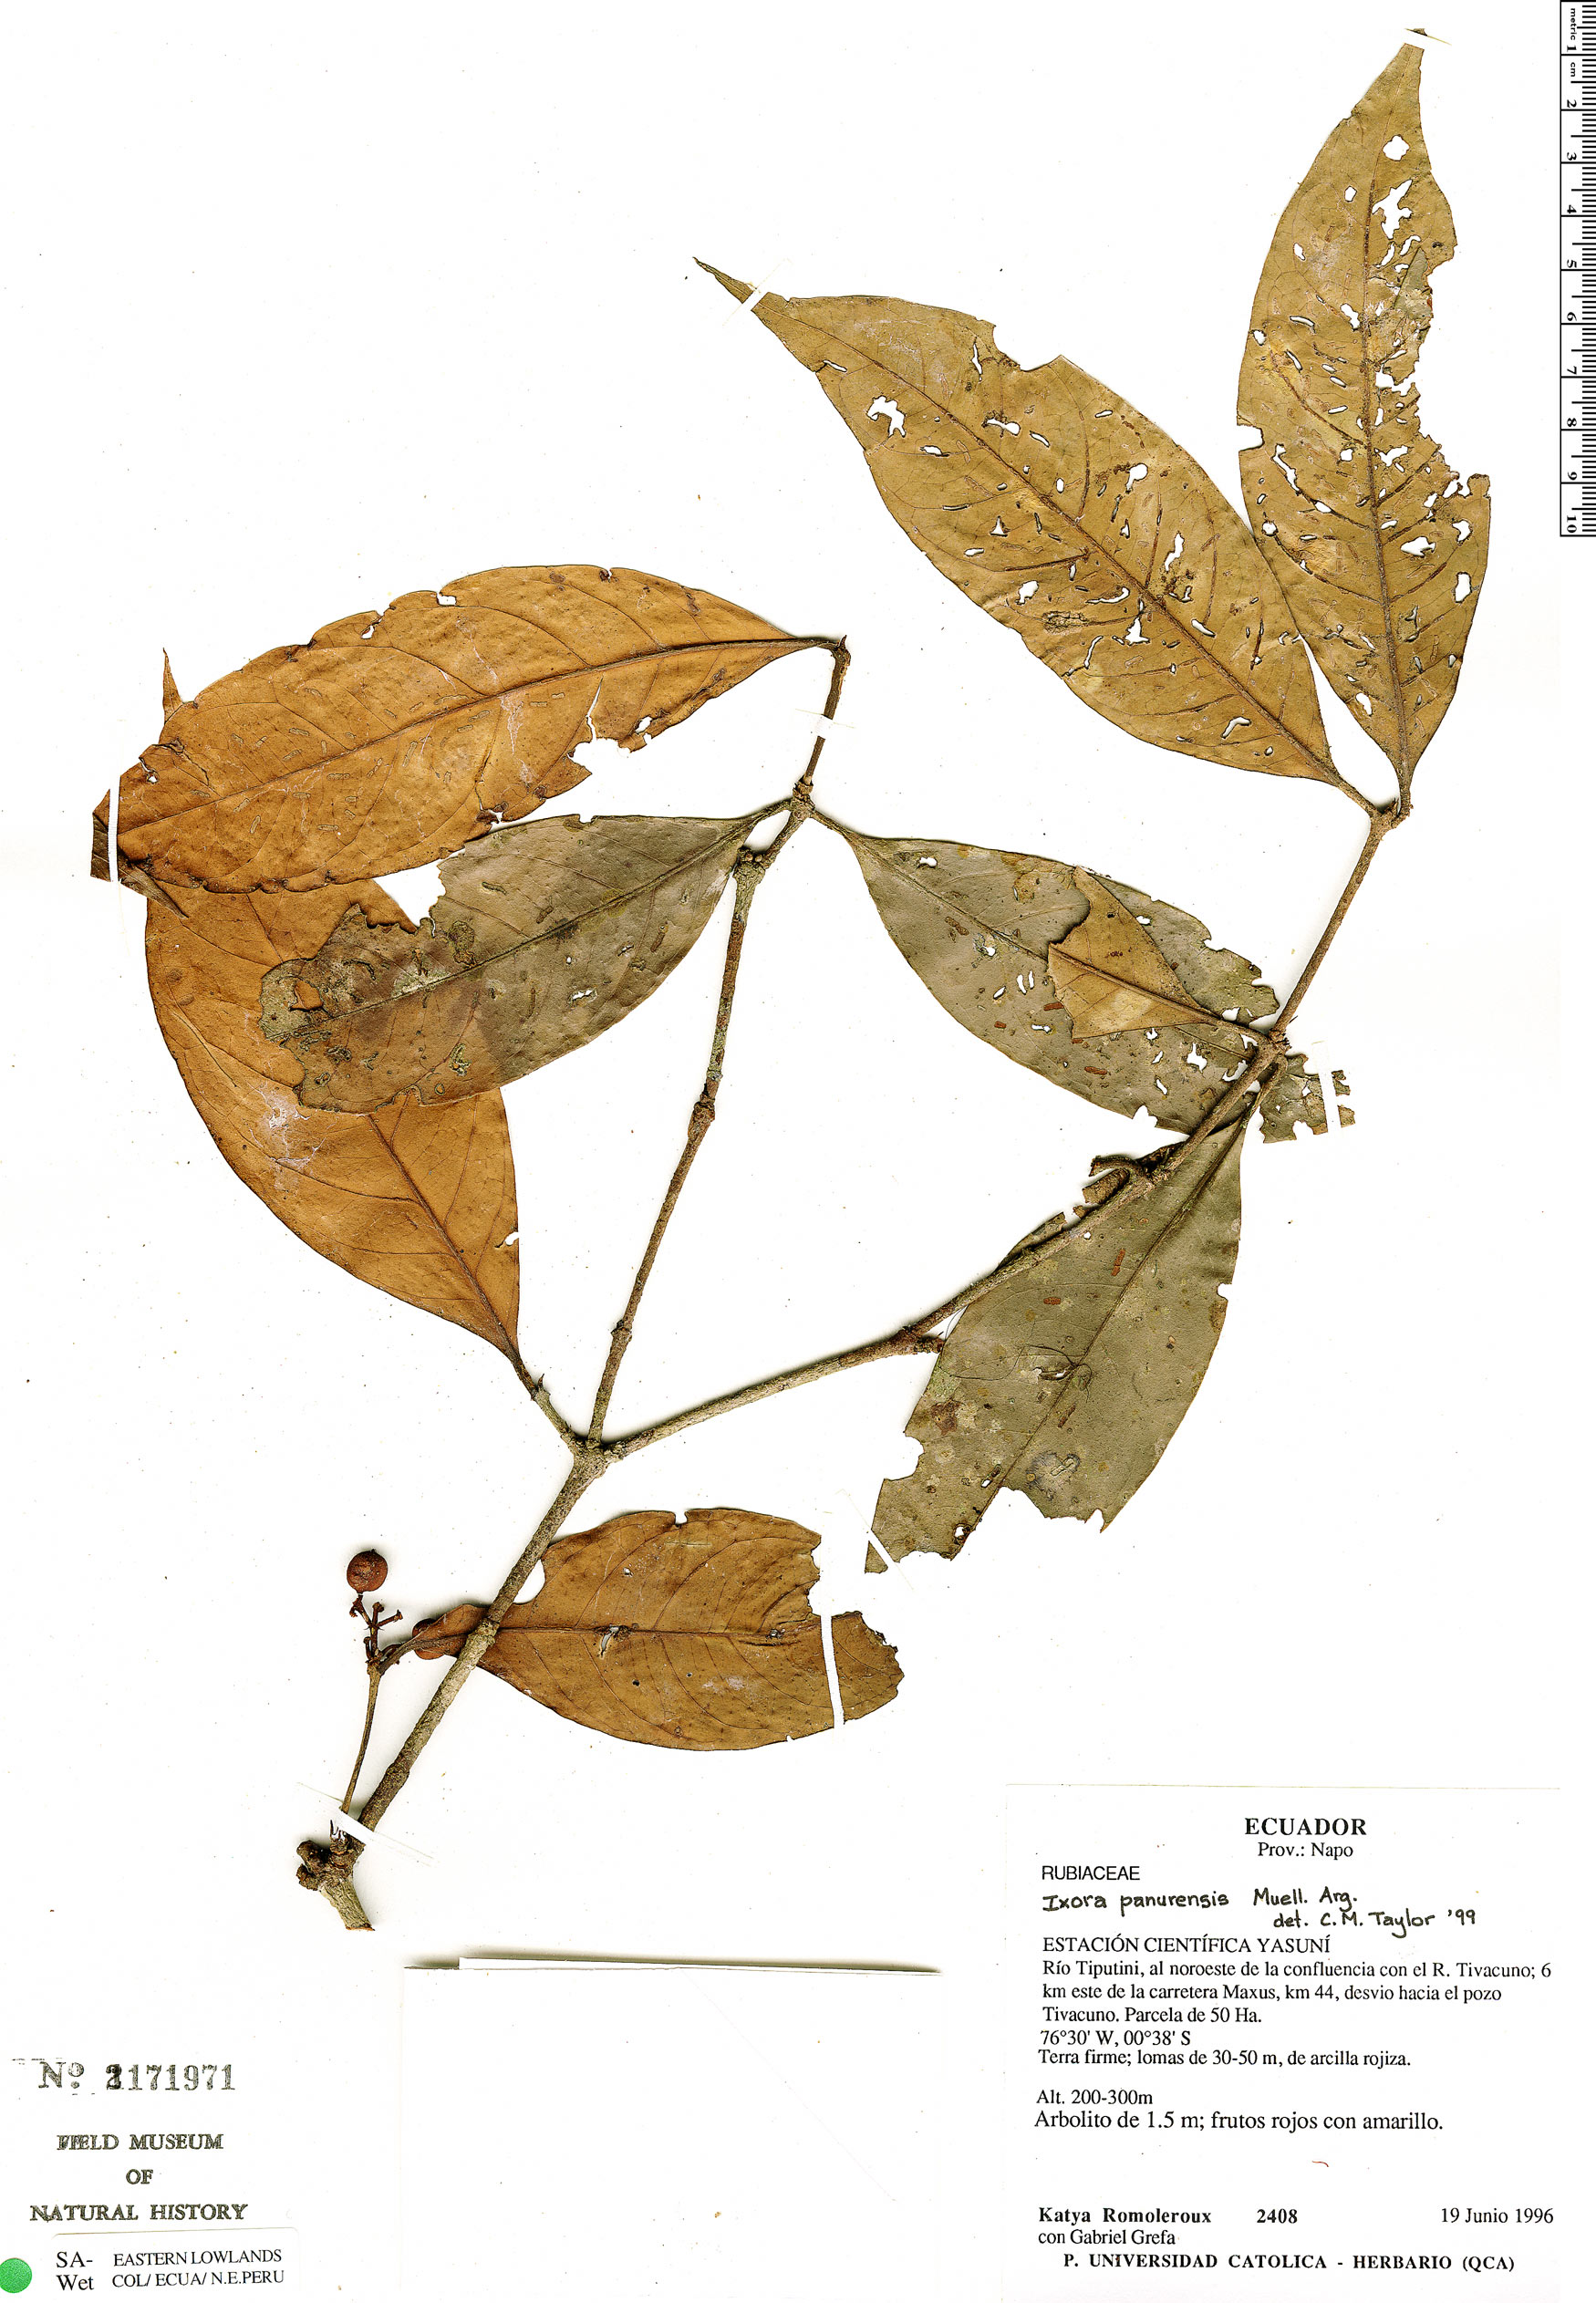 Ixora rufa | Rapid Reference | The Field Museum